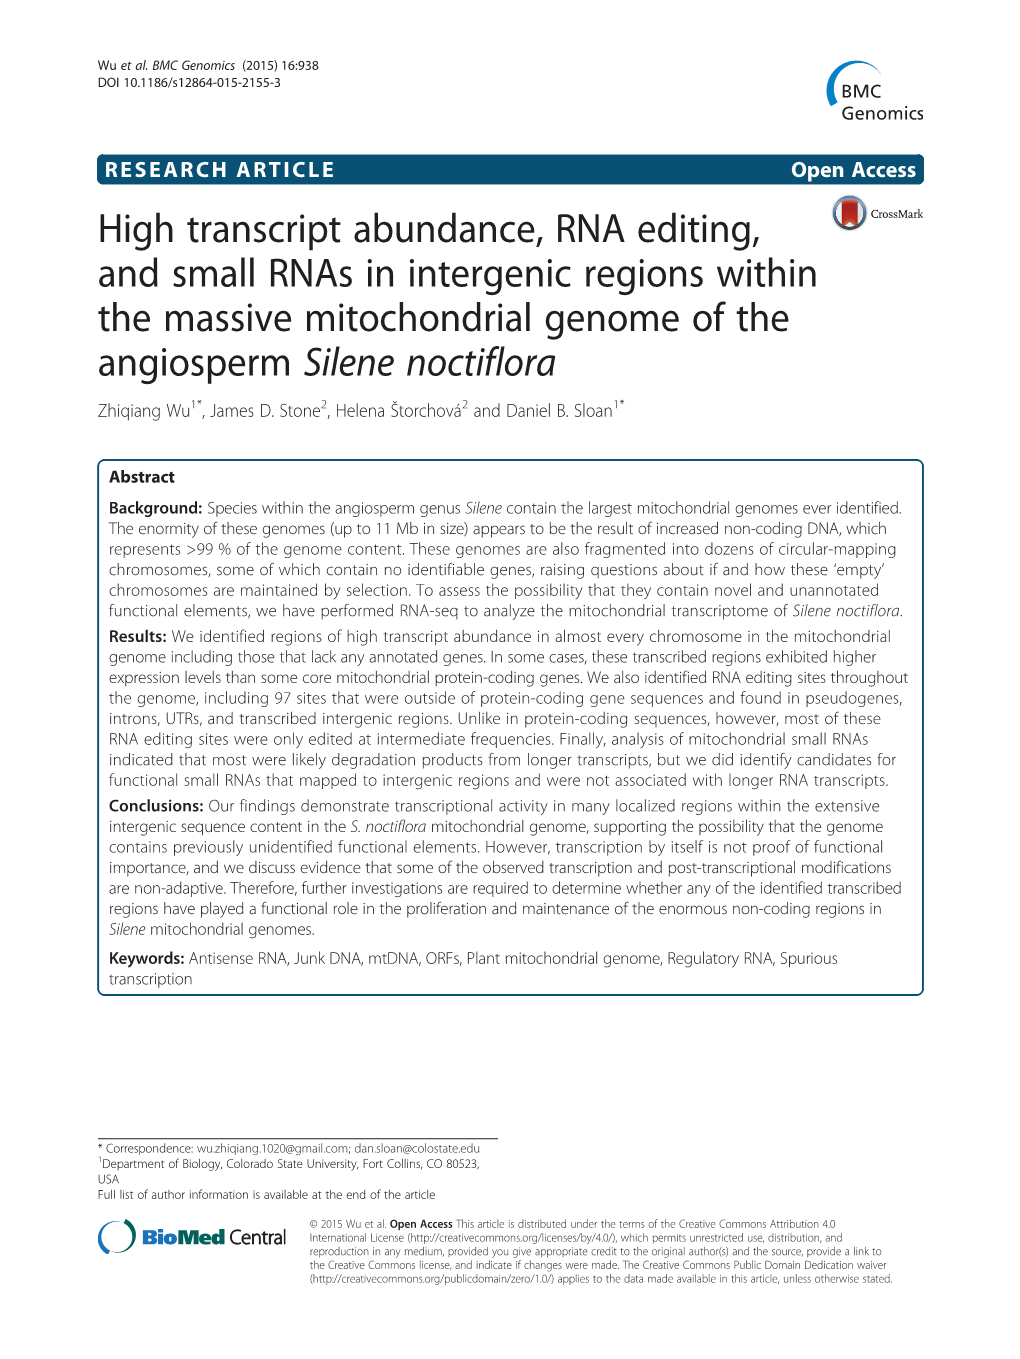 High Transcript Abundance, RNA Editing, and Small Rnas In